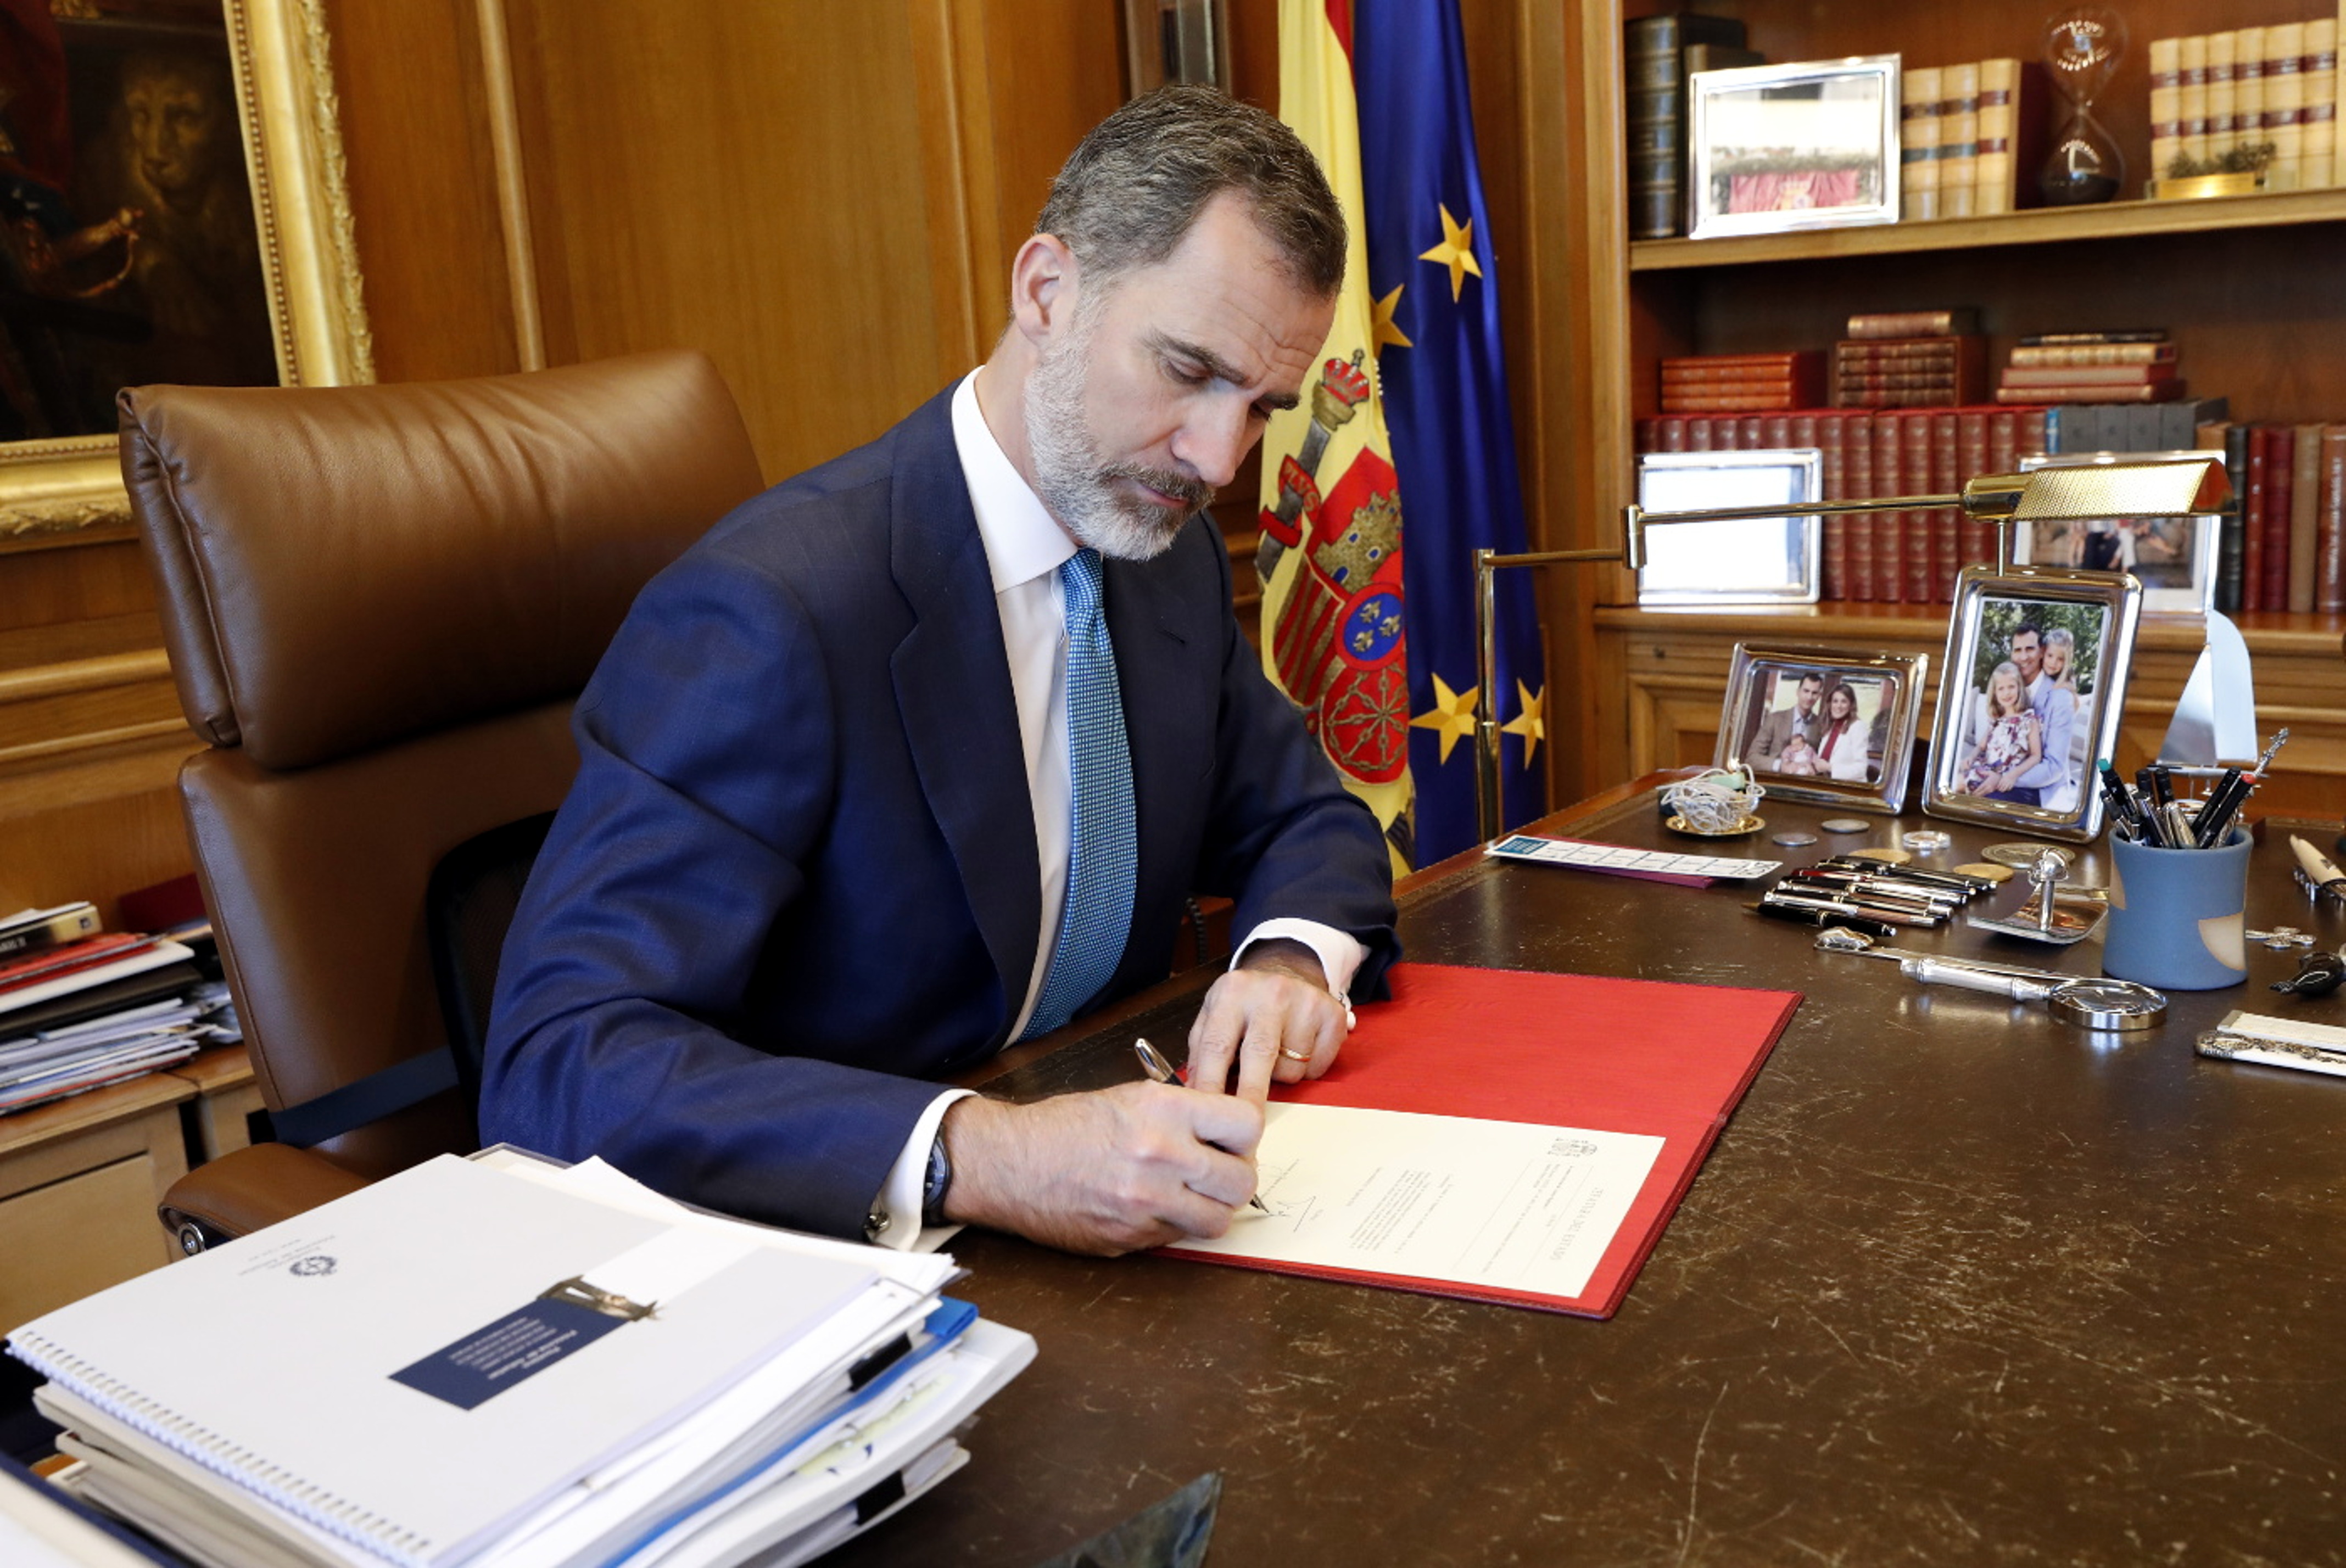 King Felipe VI sigining the decree naming Pedro Sánchez president of Spain on July 2, 2019 (Casa Real)